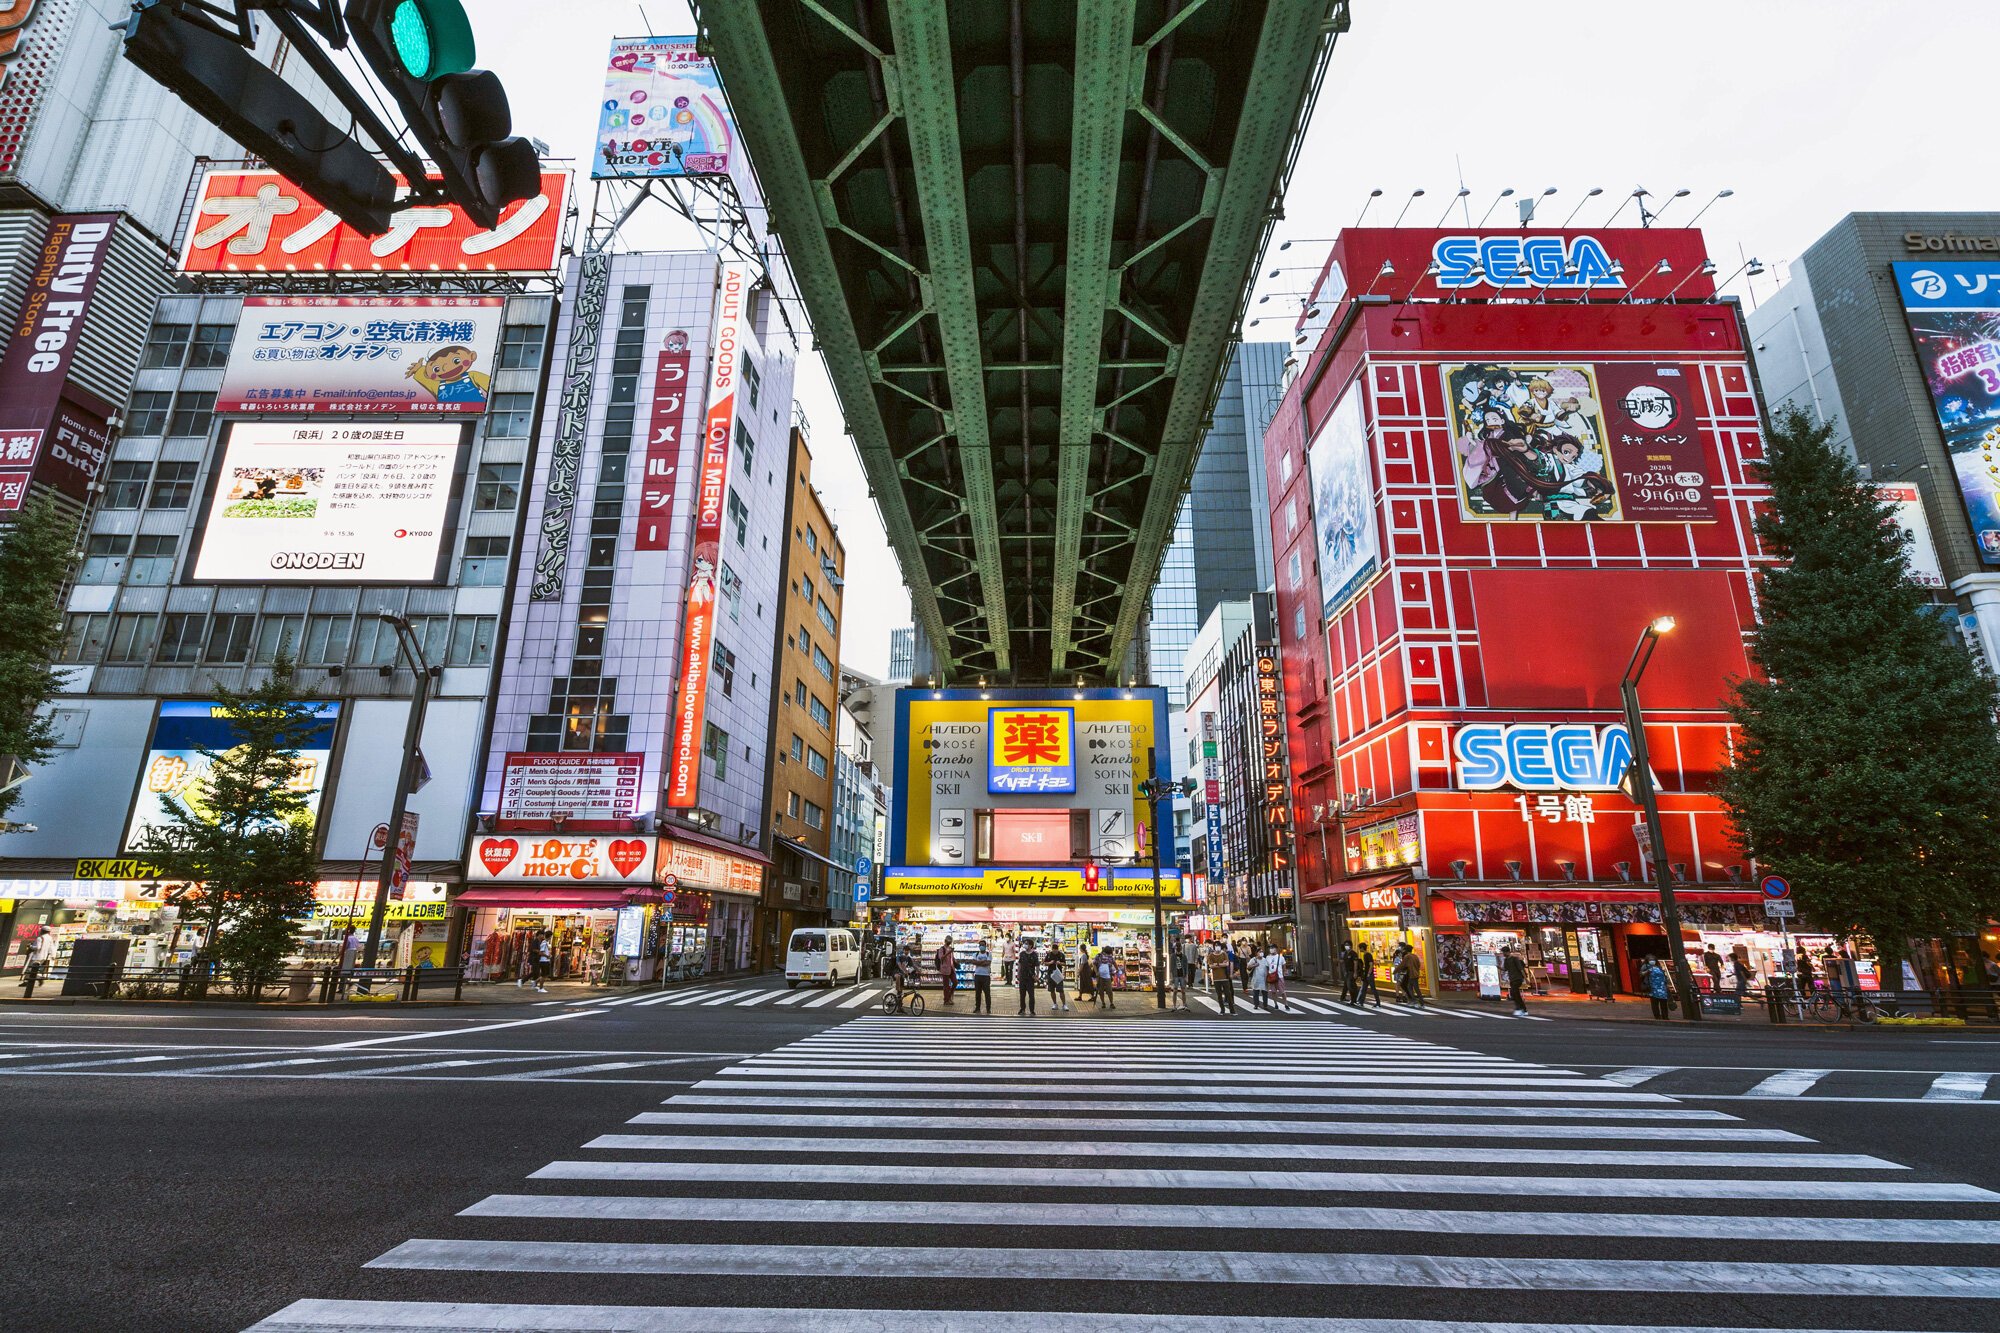 3 Nerdy Places You Must Visit In Akihabara Japan • Reformatt Travel Show